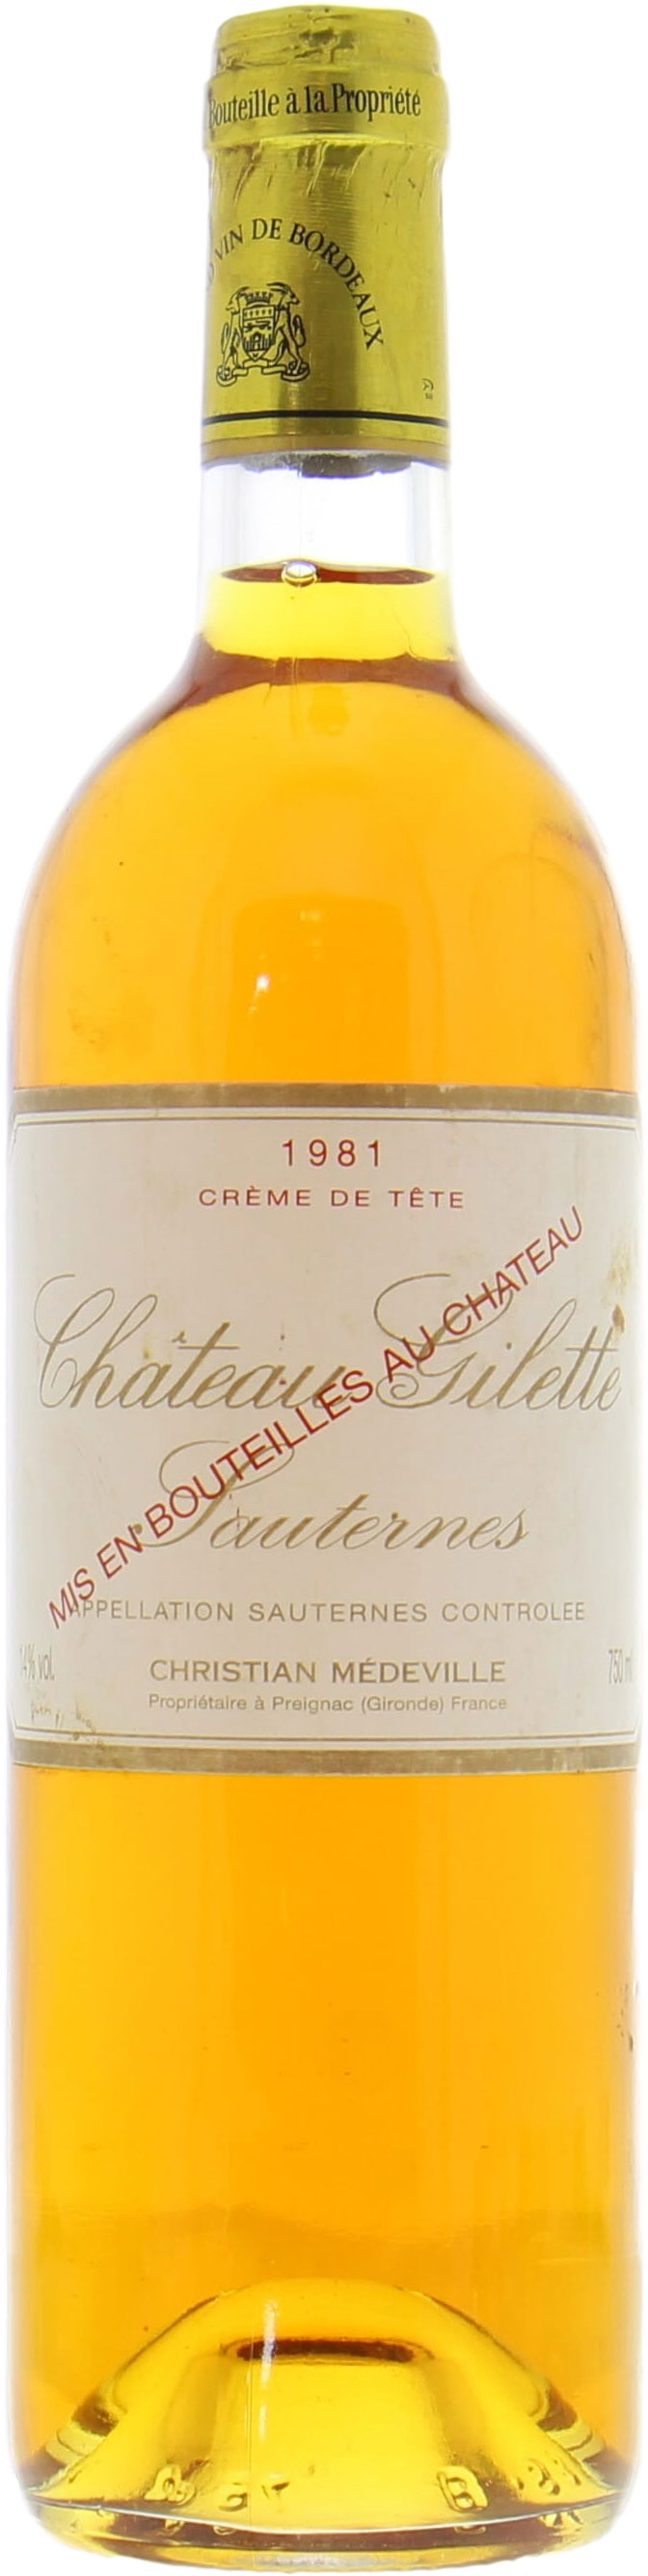 Chateau Gilette - Creme de Tete 1981